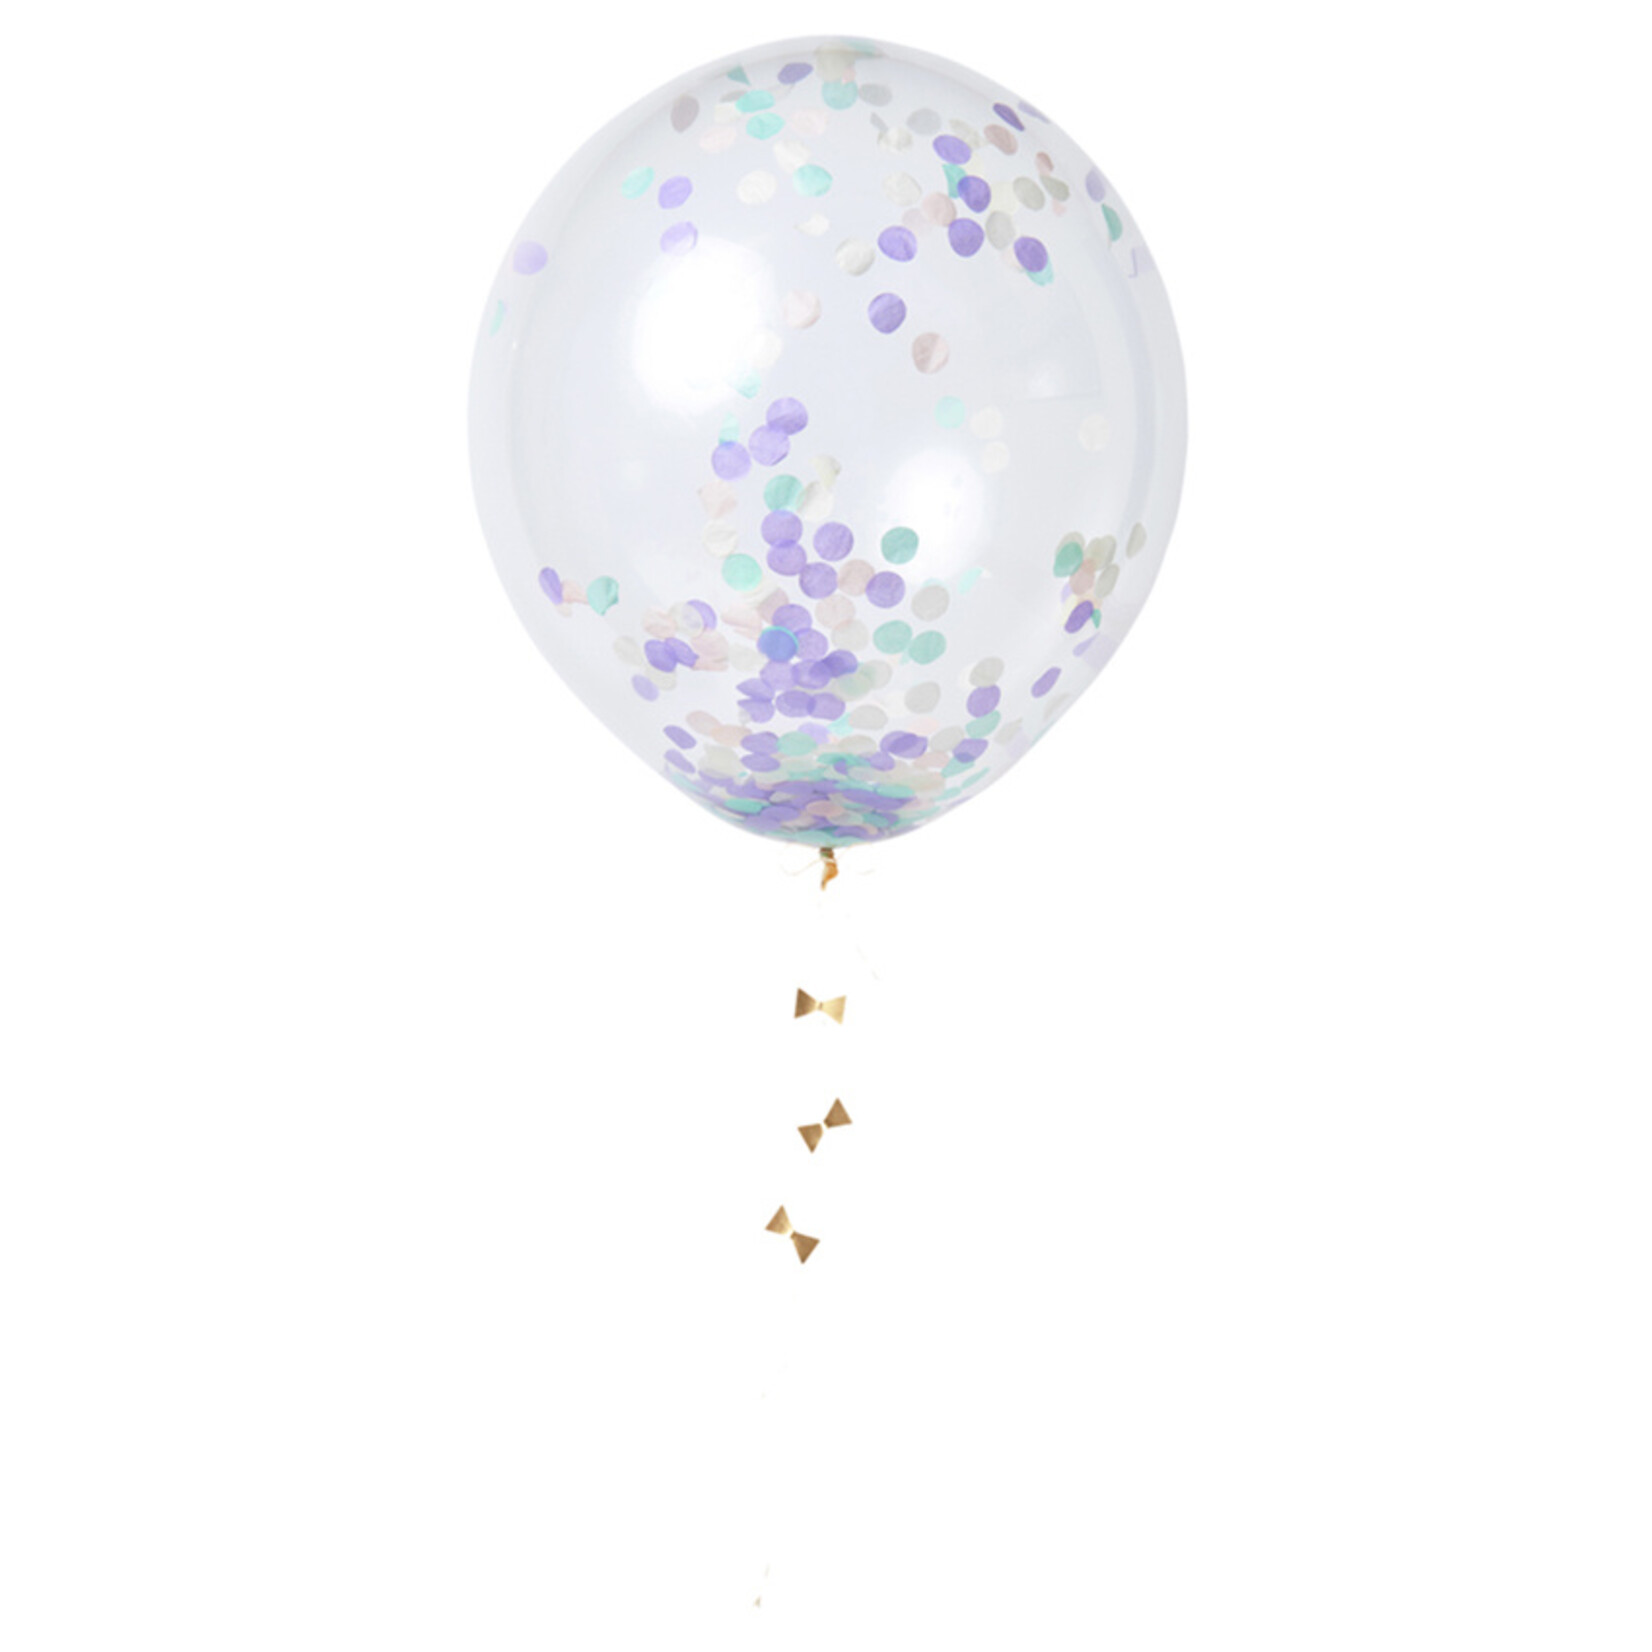 MERIMERI Pastel confetti balloon kit